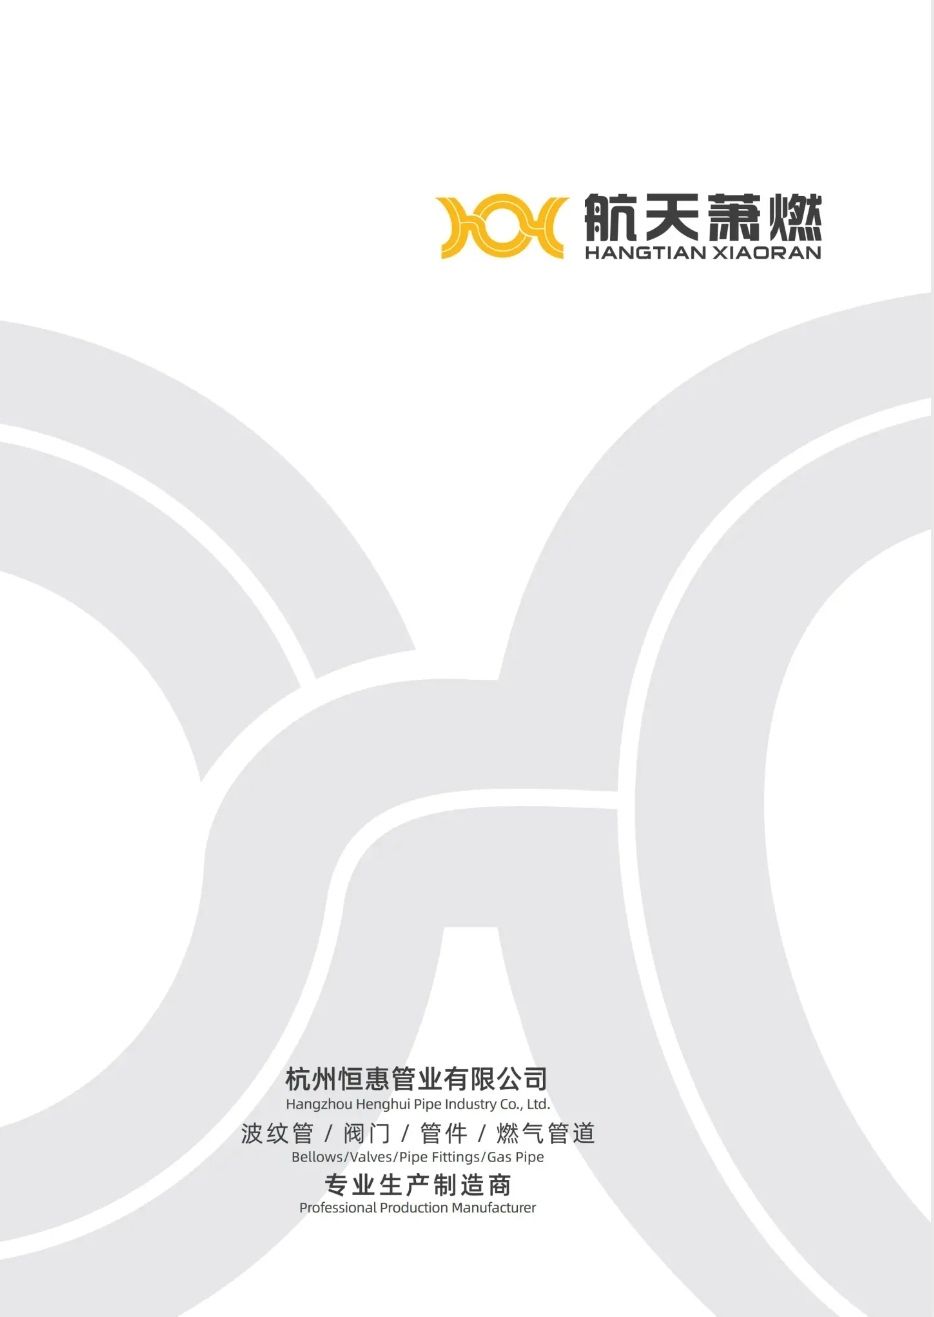 COTV全球直播-杭州恒惠管业有限公司专业生产：煤气管及煤气管阀门配件，空调管、波纹管、编织管、淋浴管等燃气管件产品，欢迎大家光临！